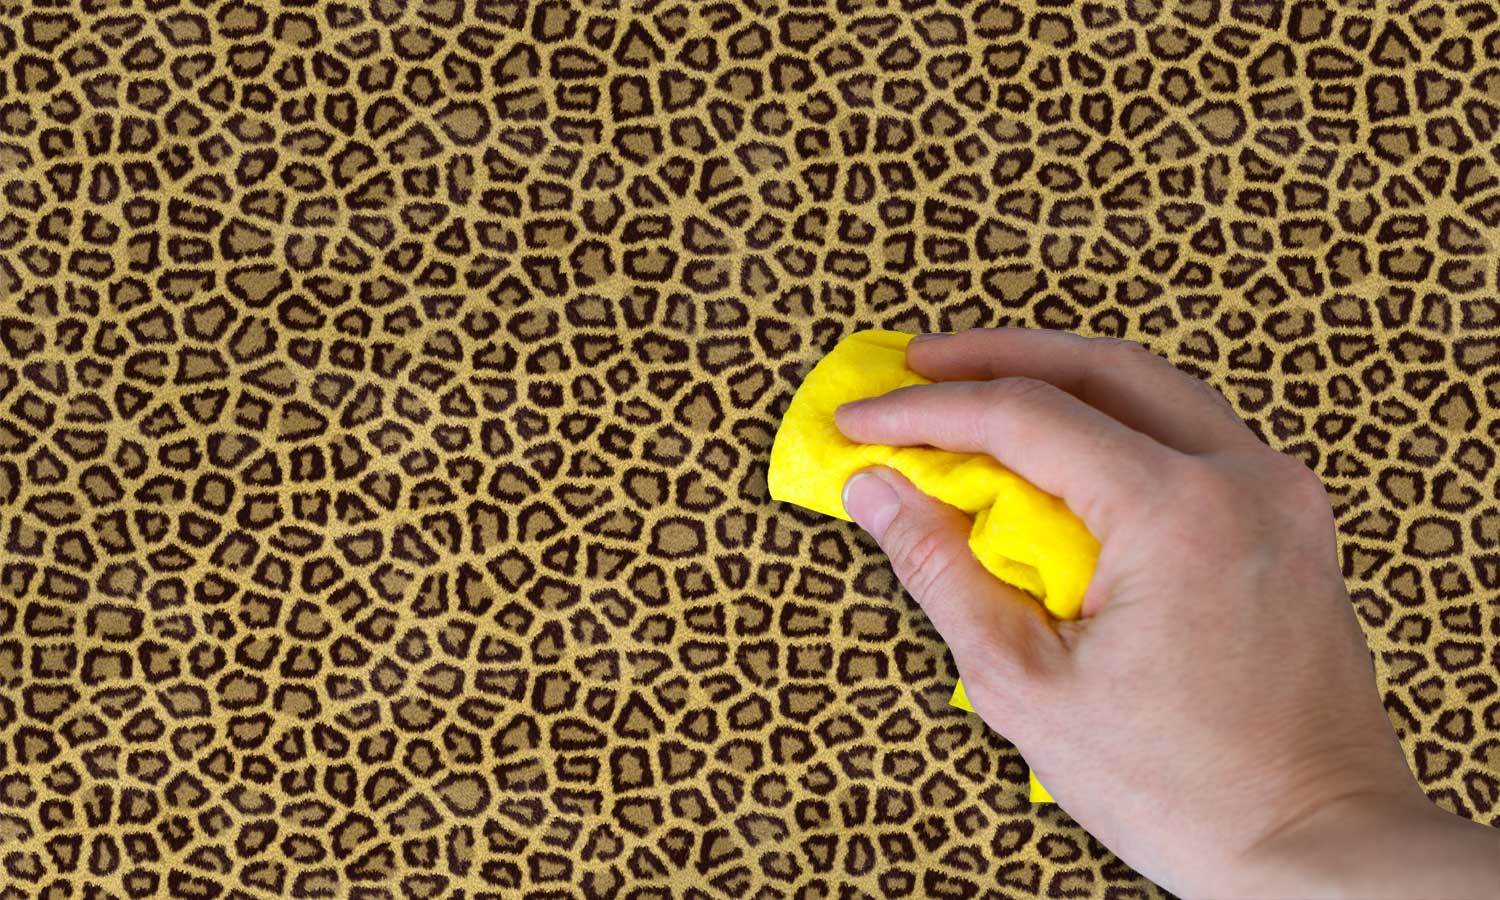 selbstklebende Folie für Möbel- Leopard  PAT060 - life-decor.de